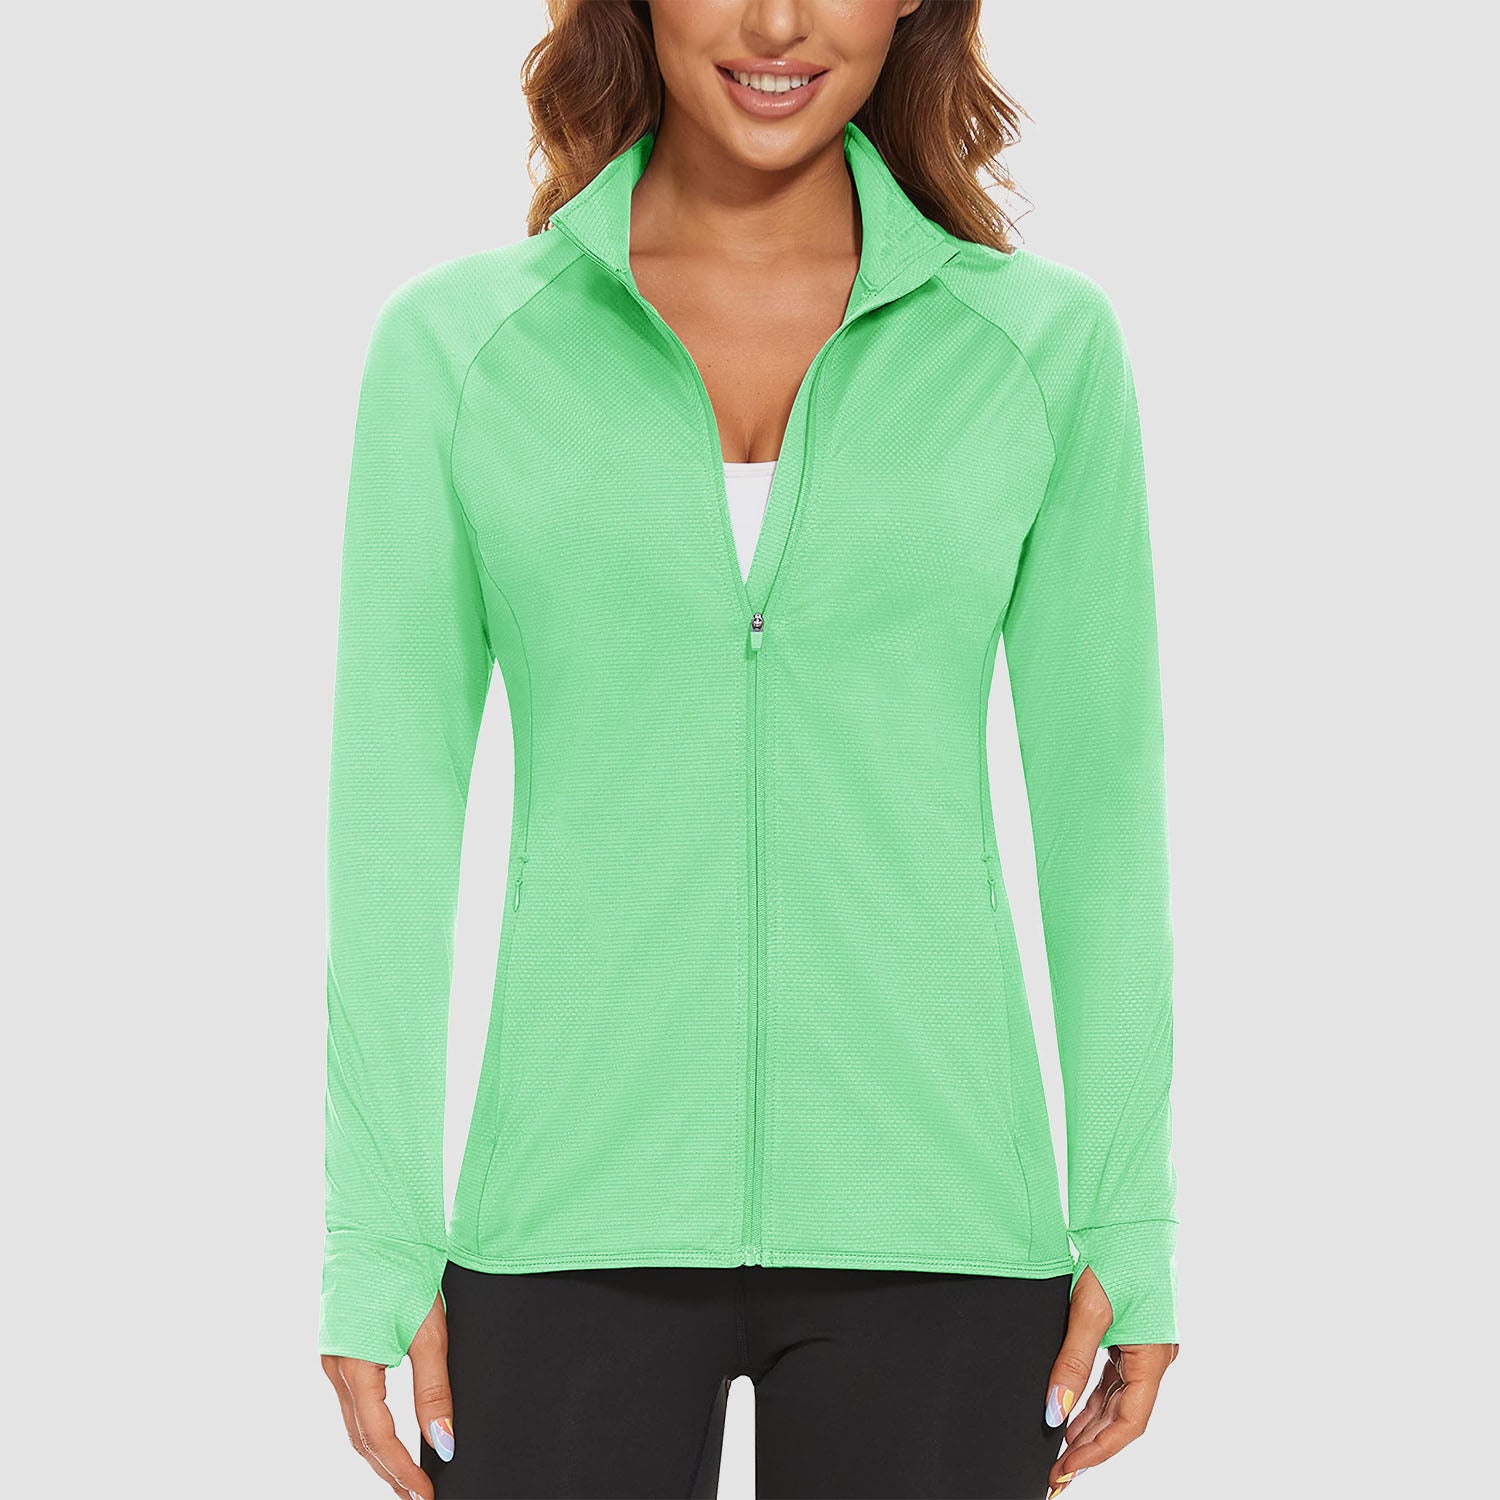 Women's Sun Protection Jacket Lightweight Long Sleeve UPF 50+ Shirts Hiking Shirt with Zipper Pockets